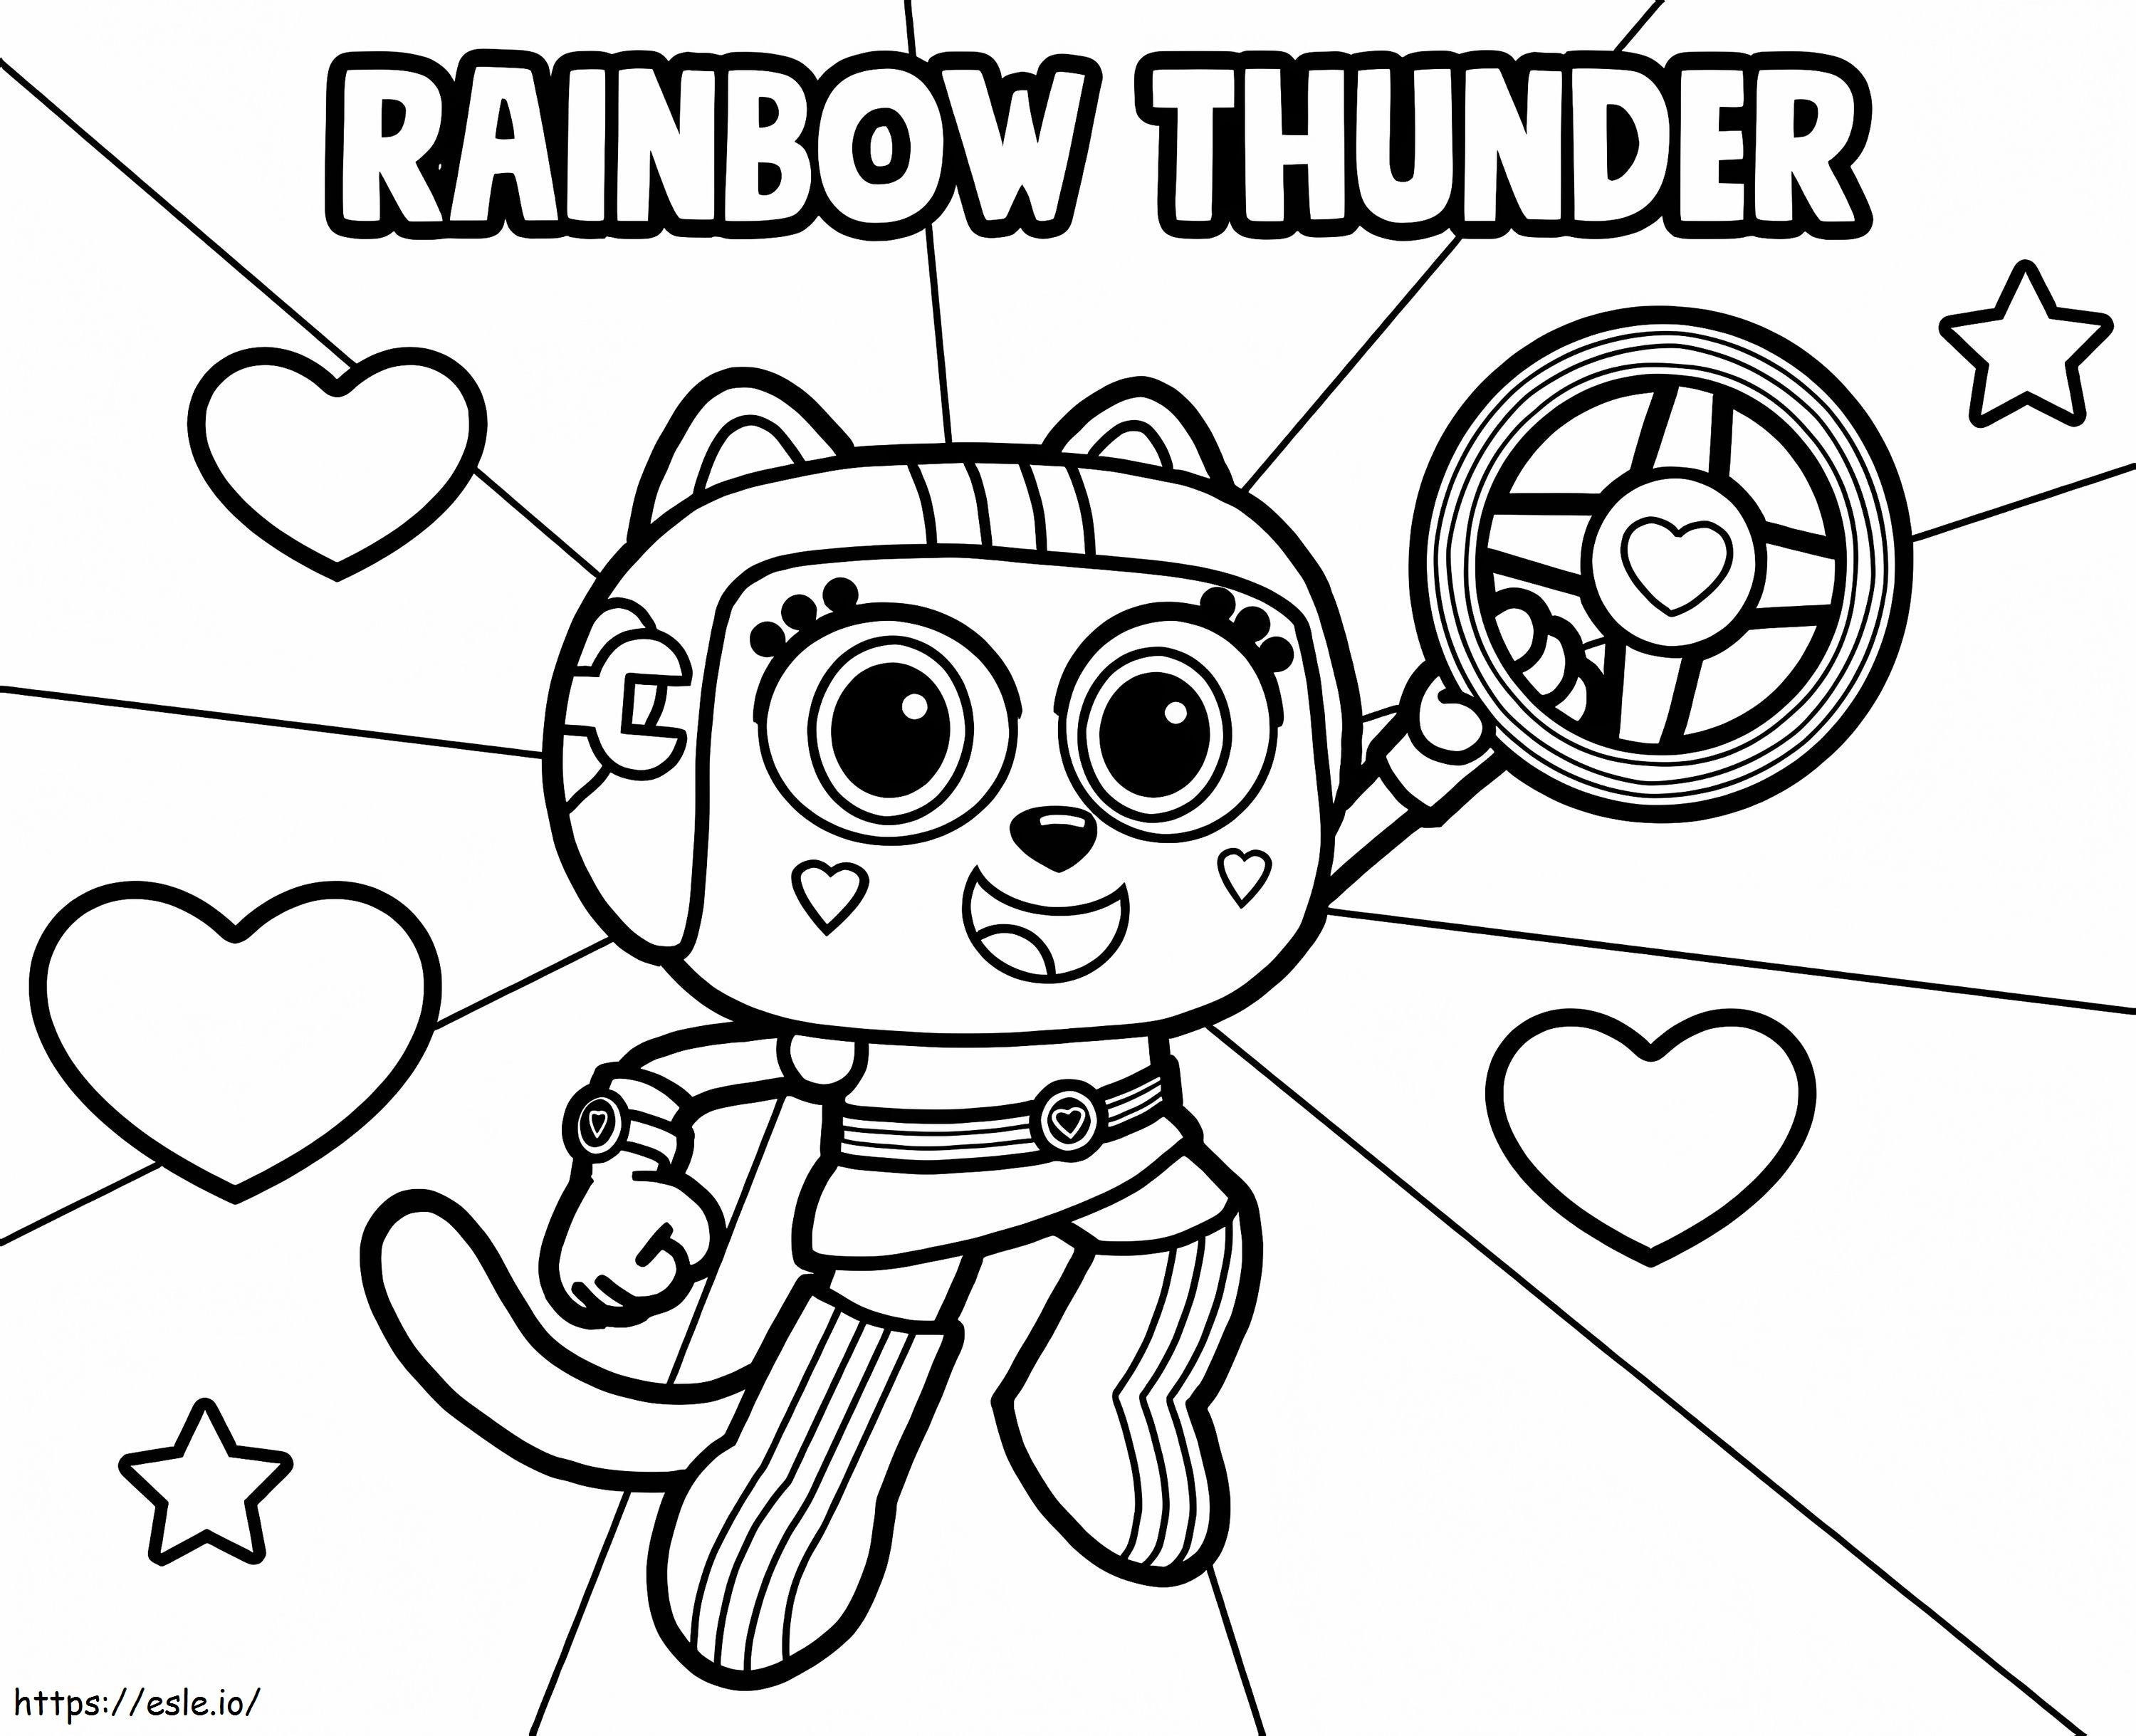 Rainbow Thunder van Chico Bon Bon kleurplaat kleurplaat